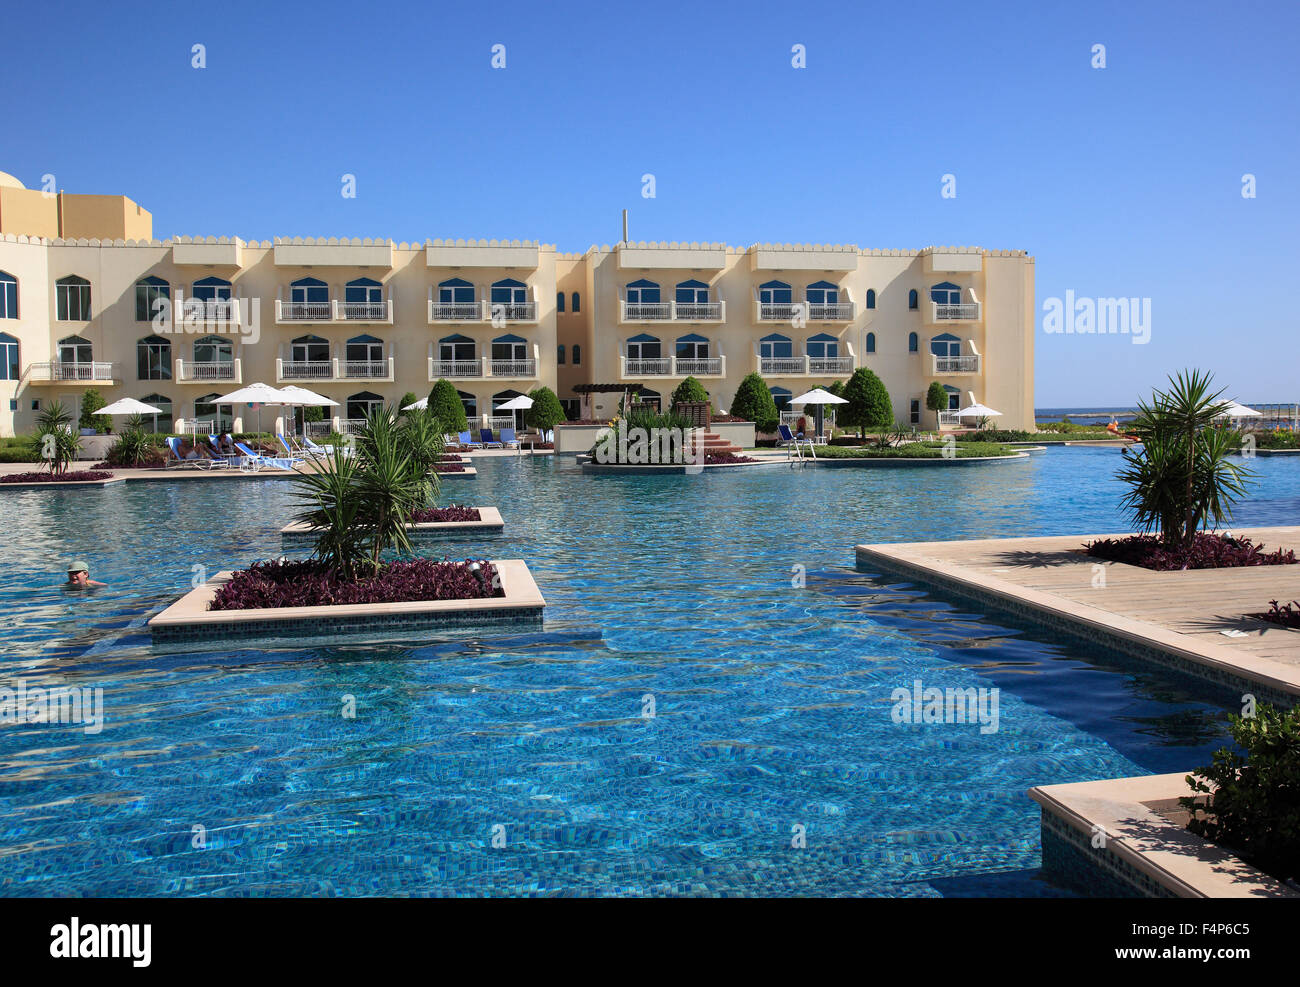 Hotel of Marriott with Mirbat, Oman Stock Photo